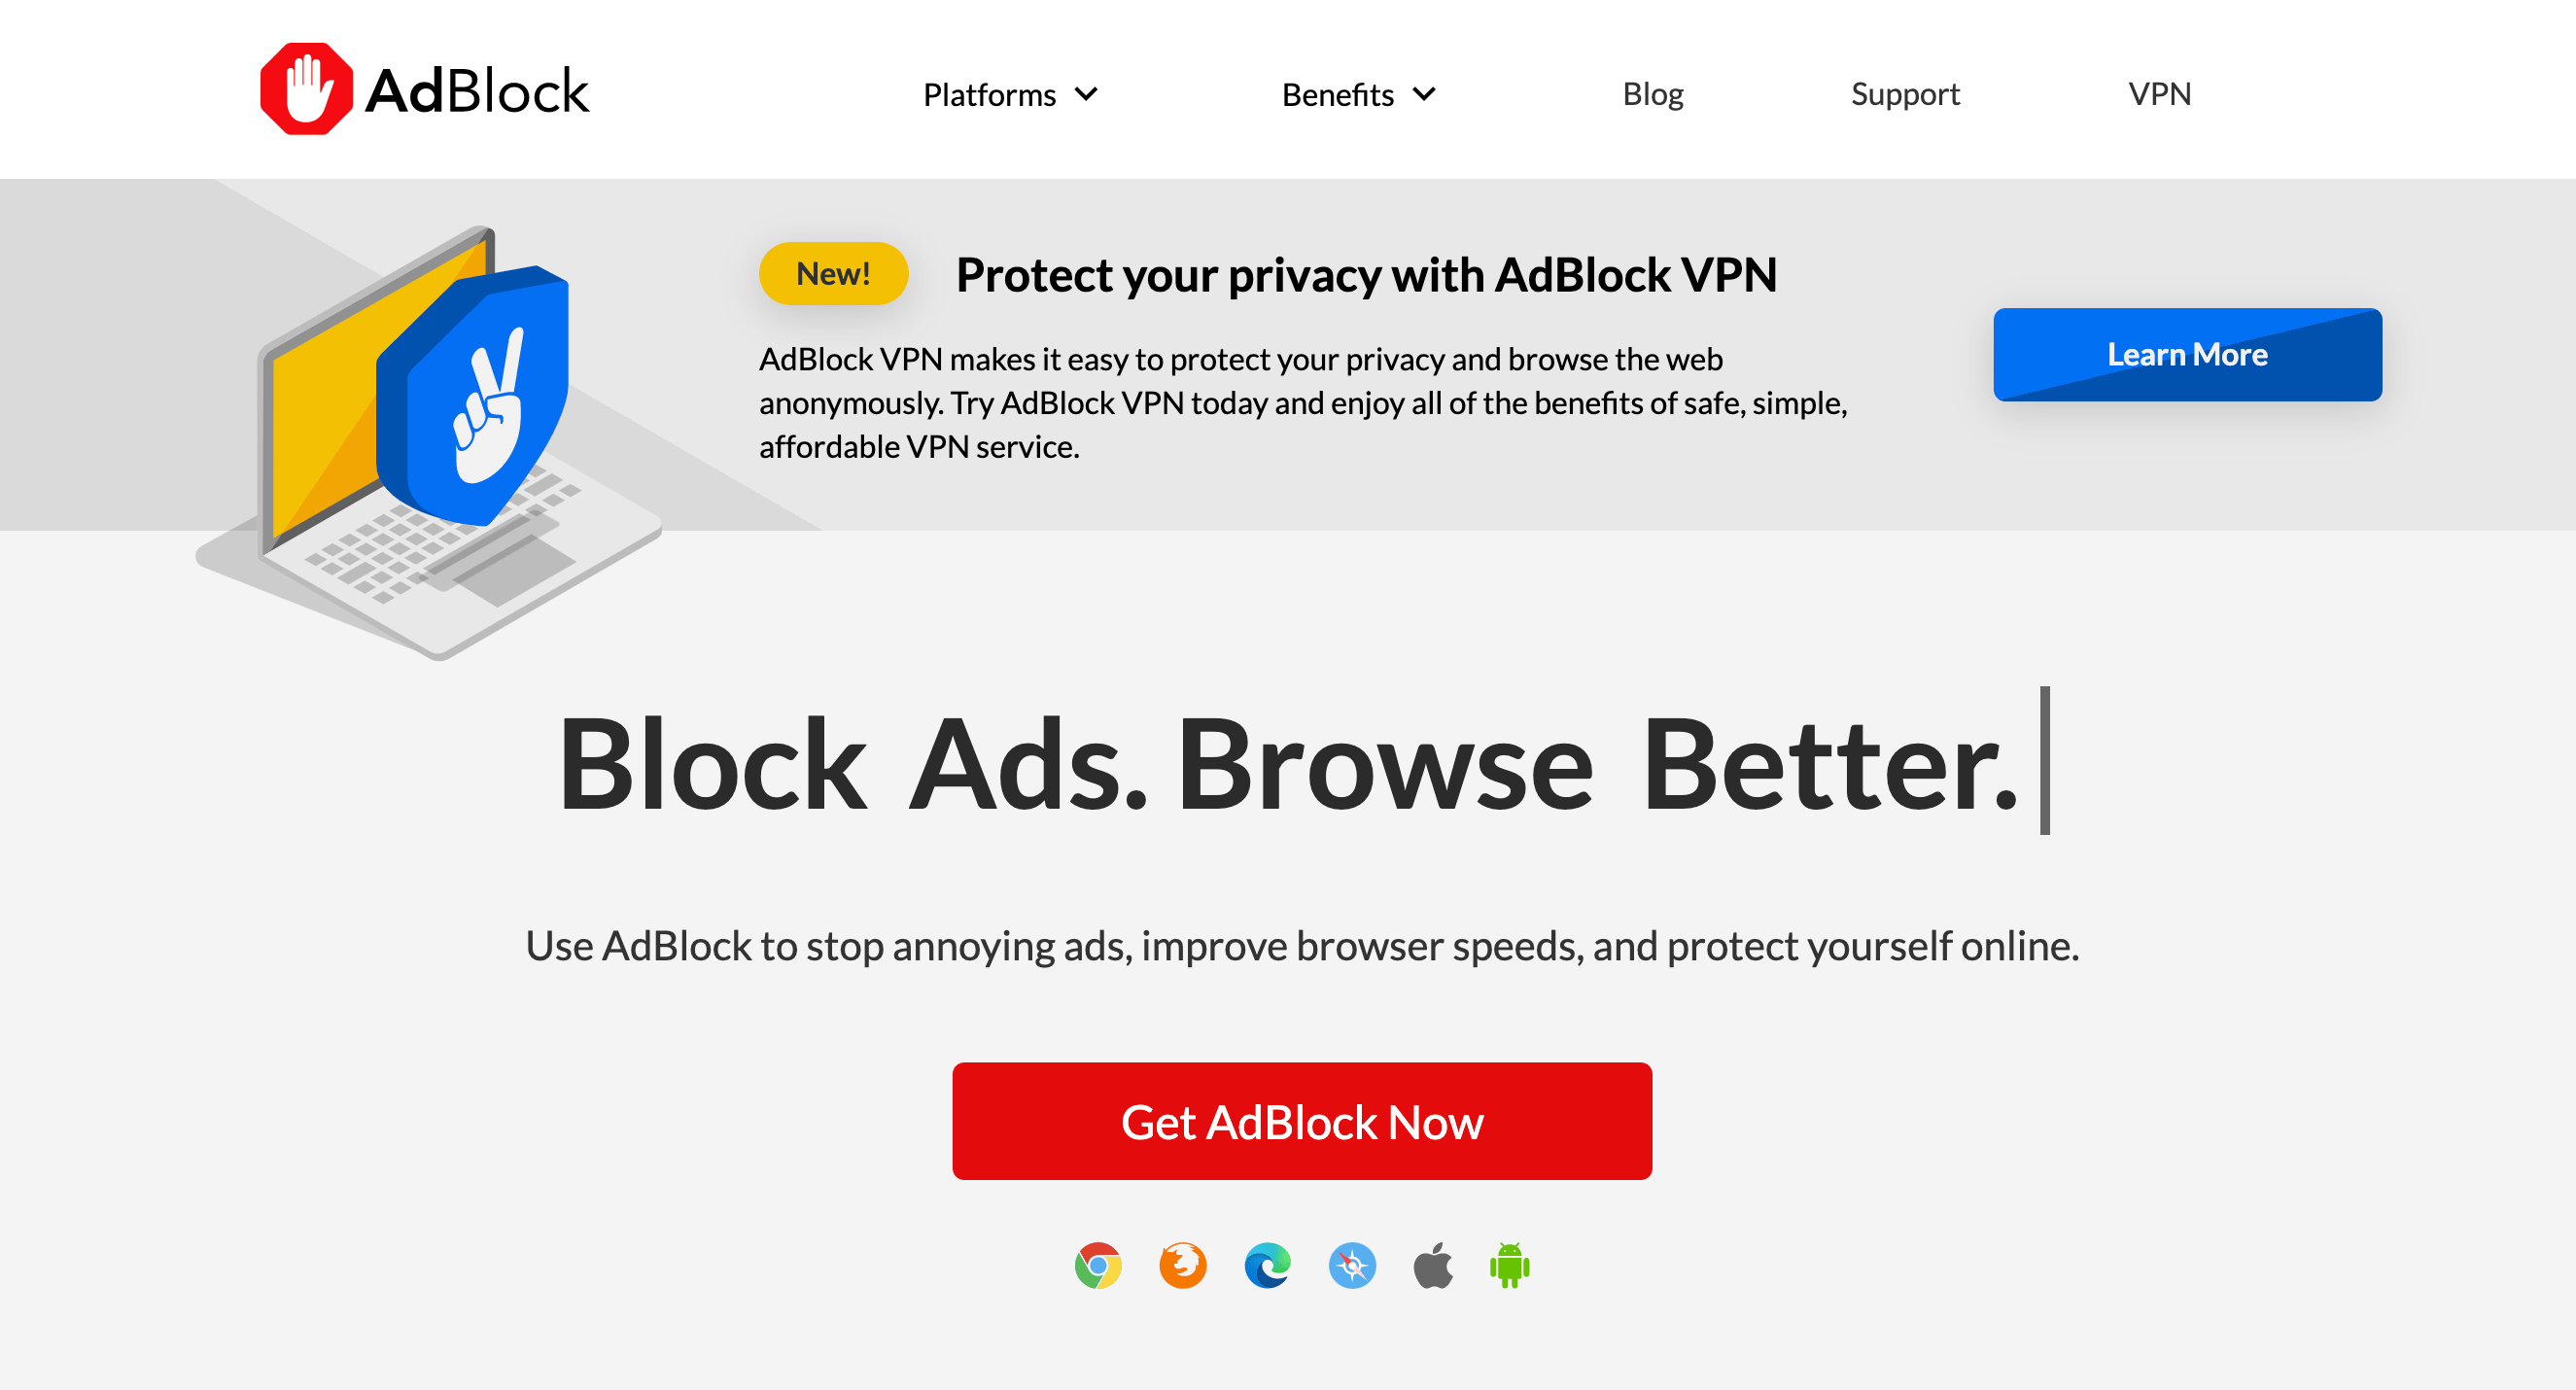 AdBlock home page